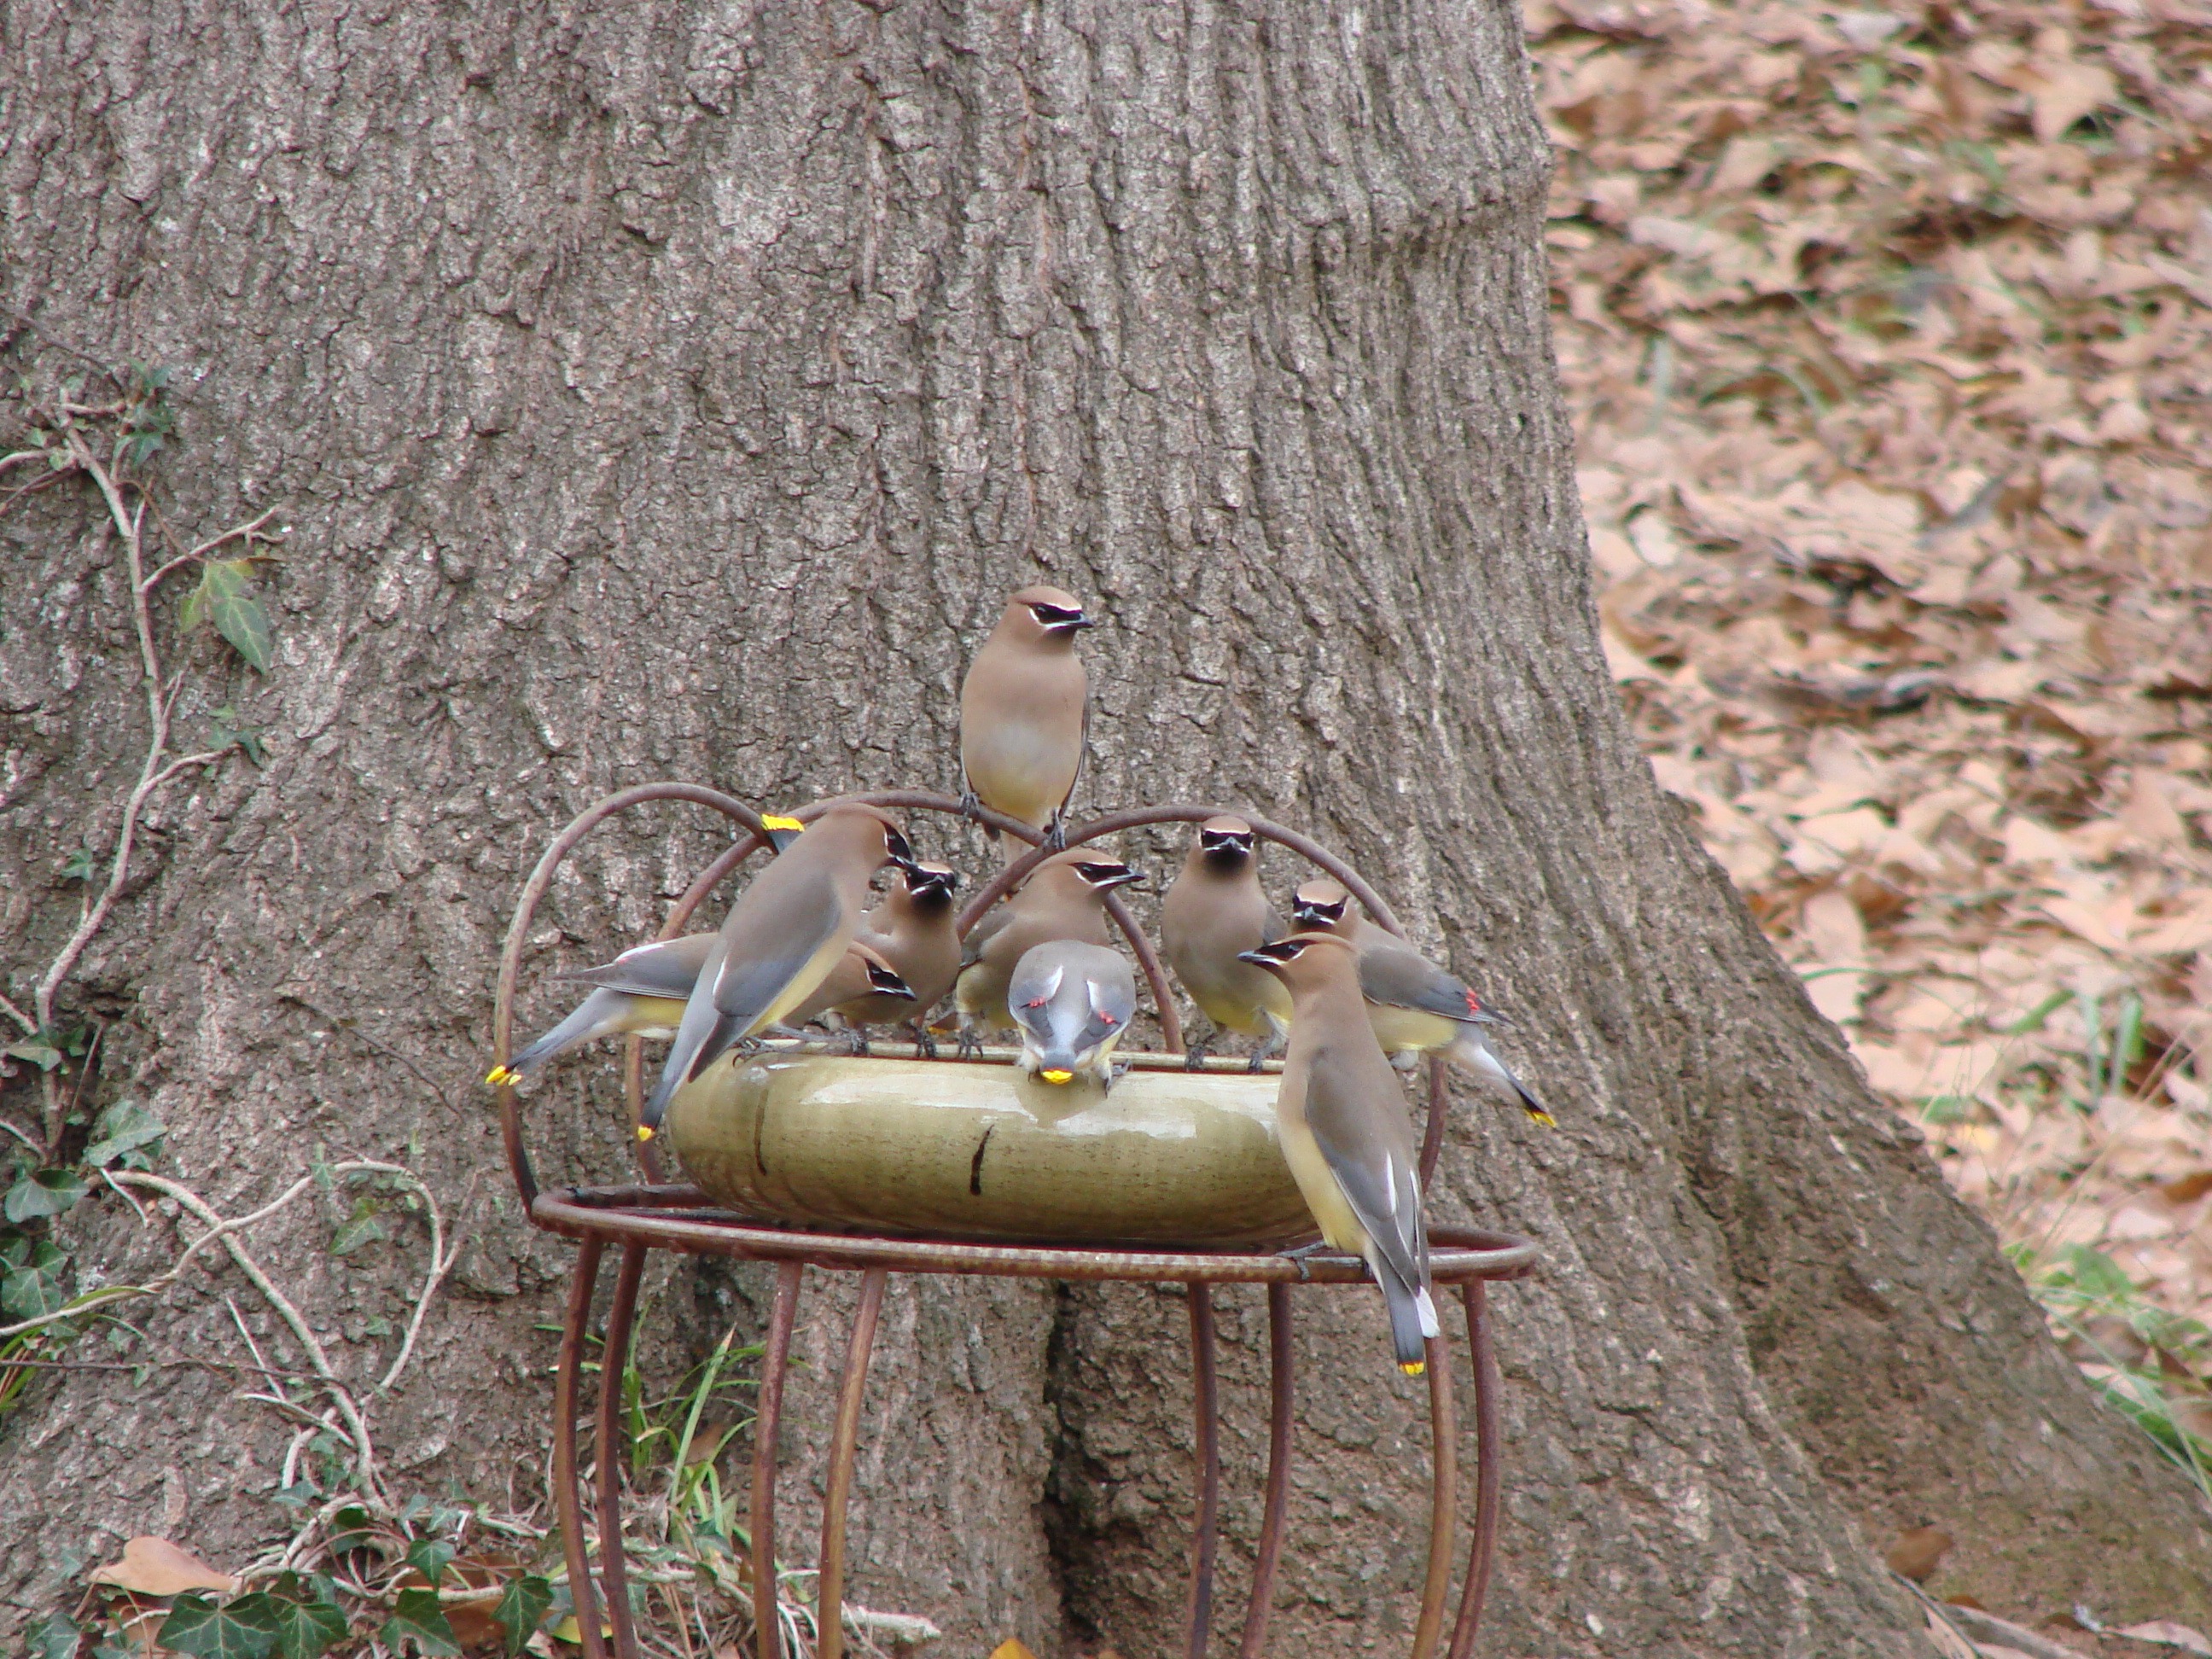 Cedar waxwings birds on feeder